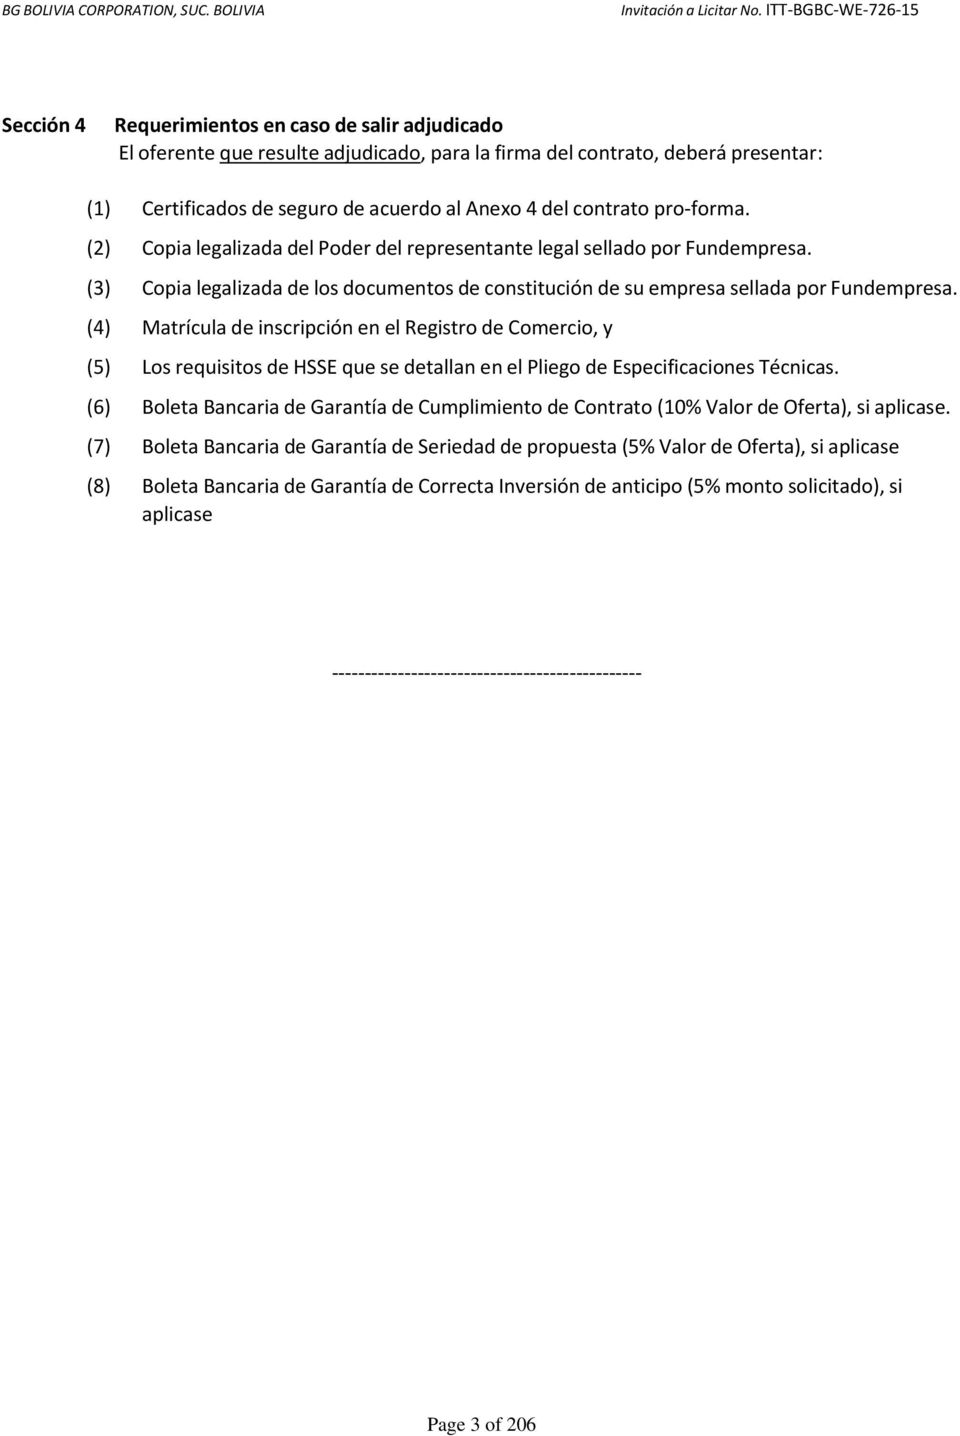 Anexo 4 del contrato pro forma. (2) Copia legalizada del Poder del representante legal sellado por Fundempresa.